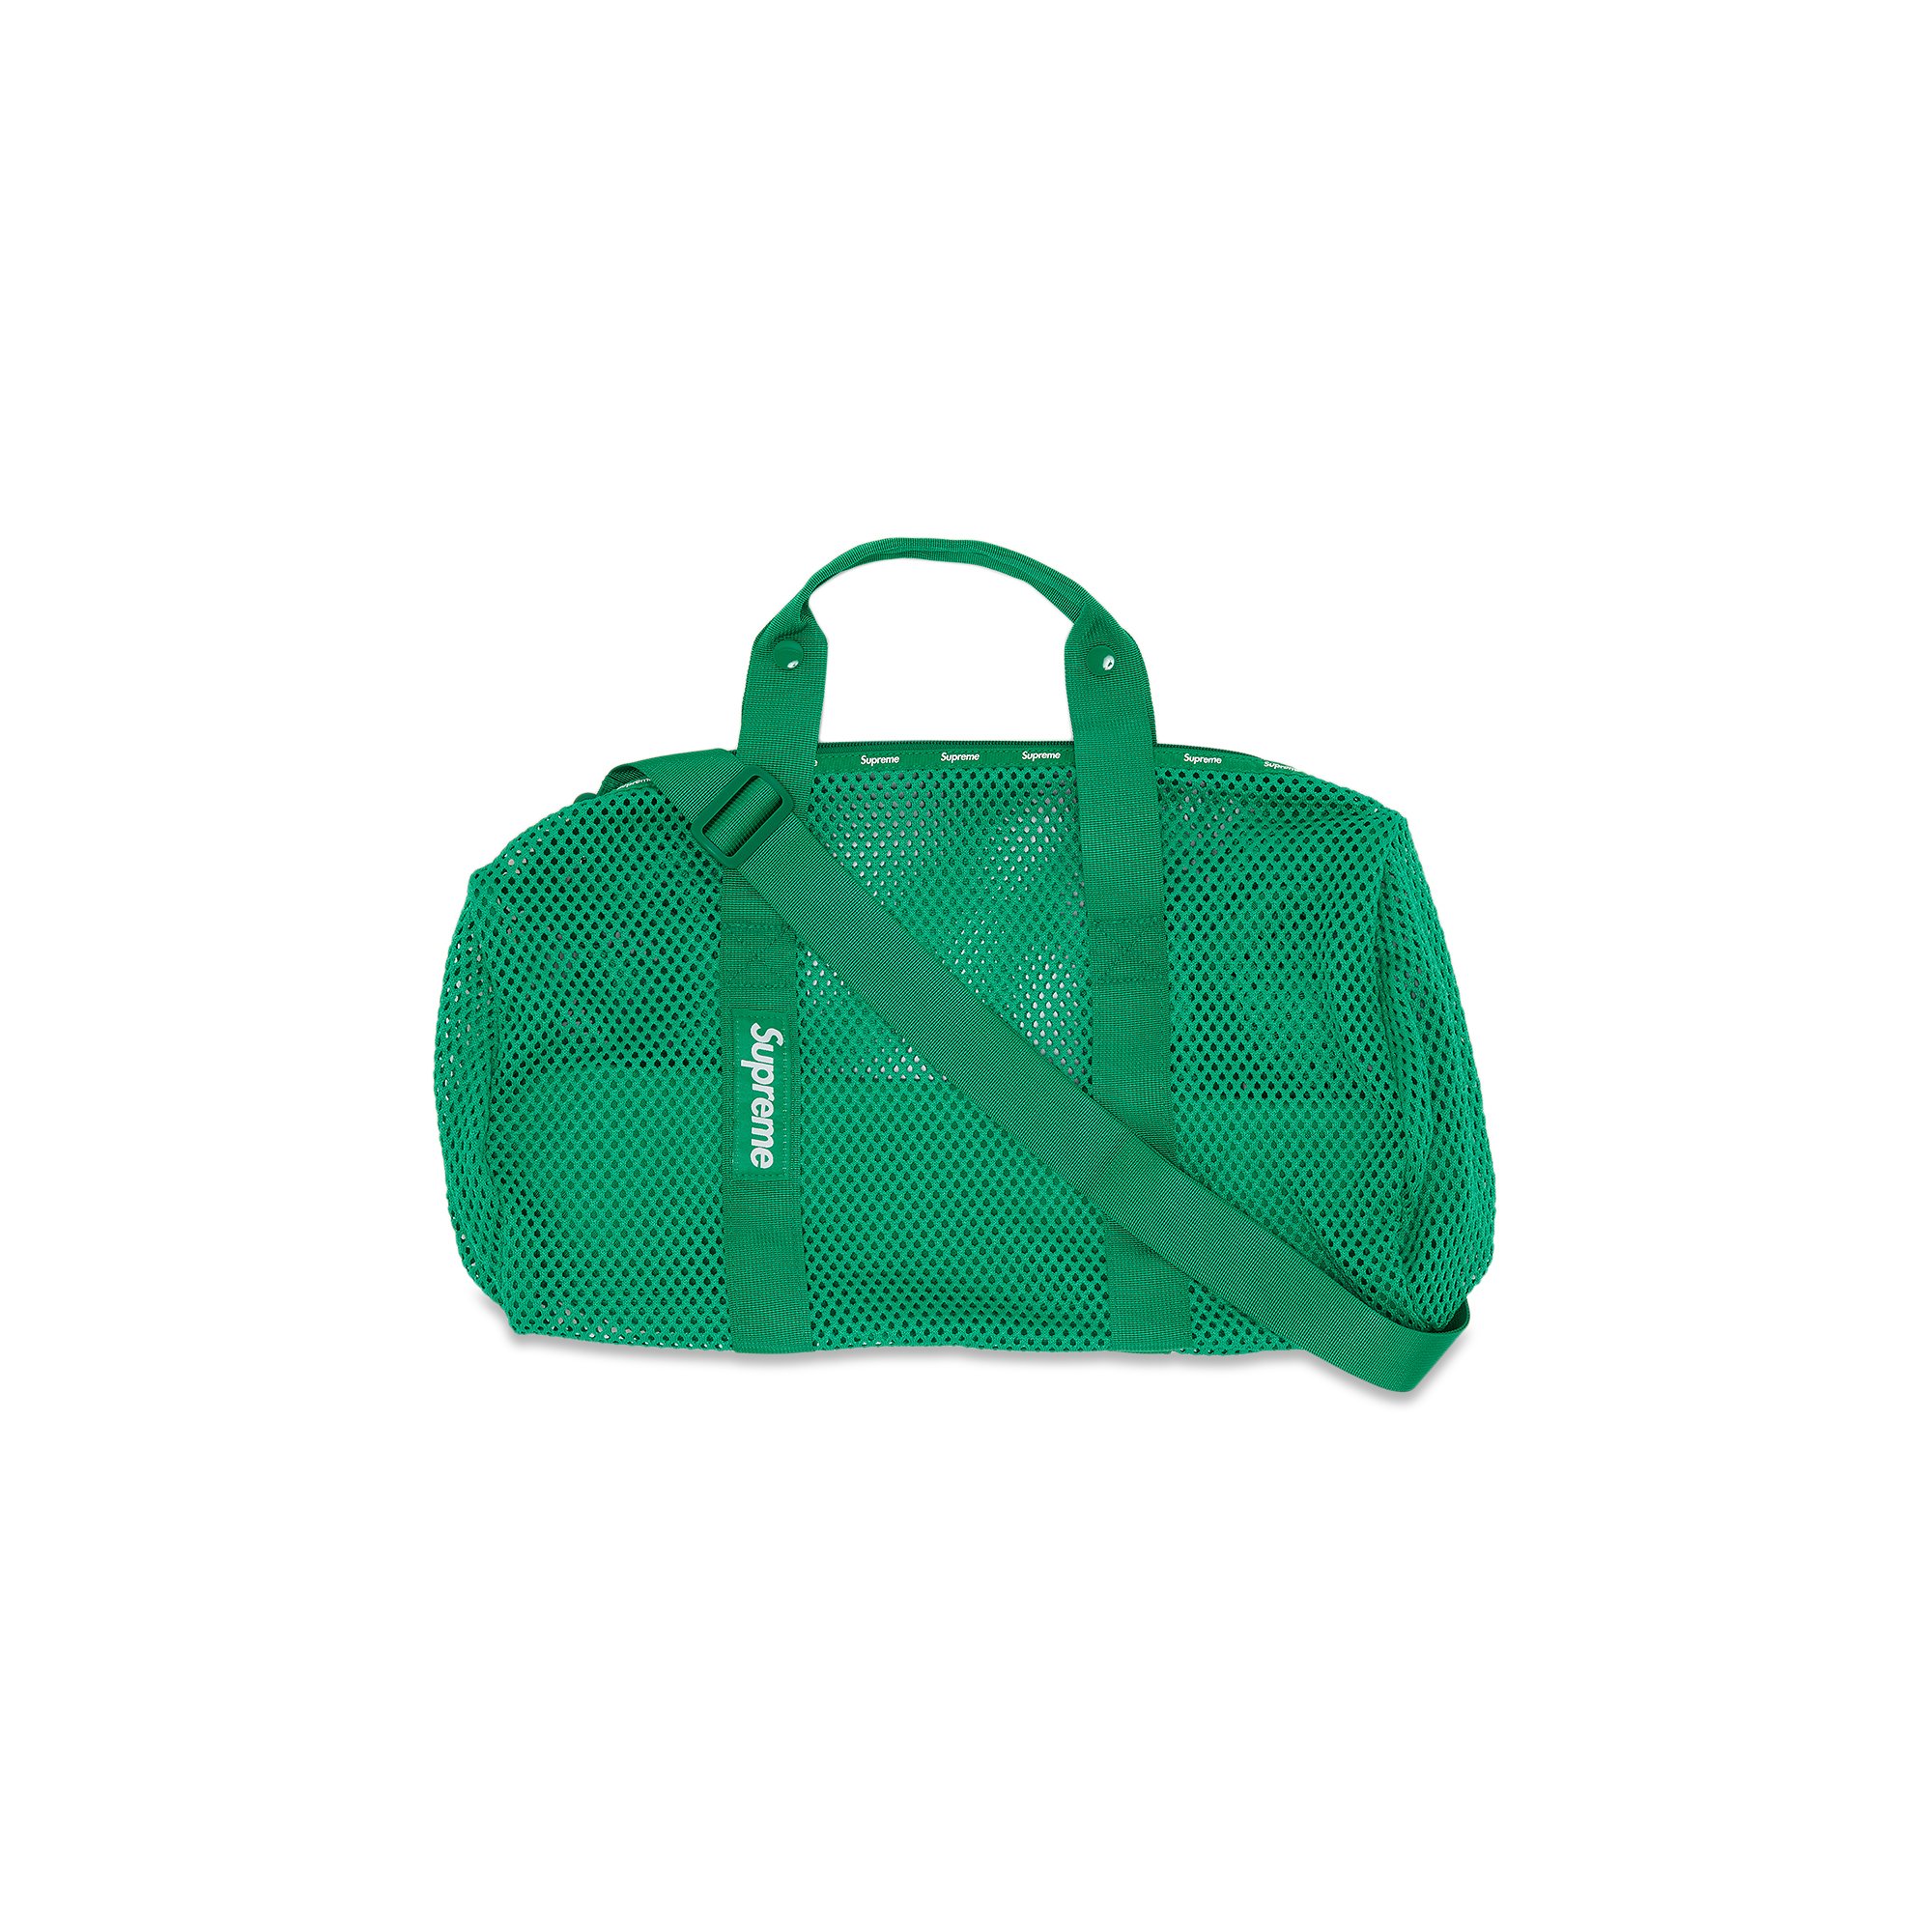 Supreme Mesh Mini Duffle Bag Green